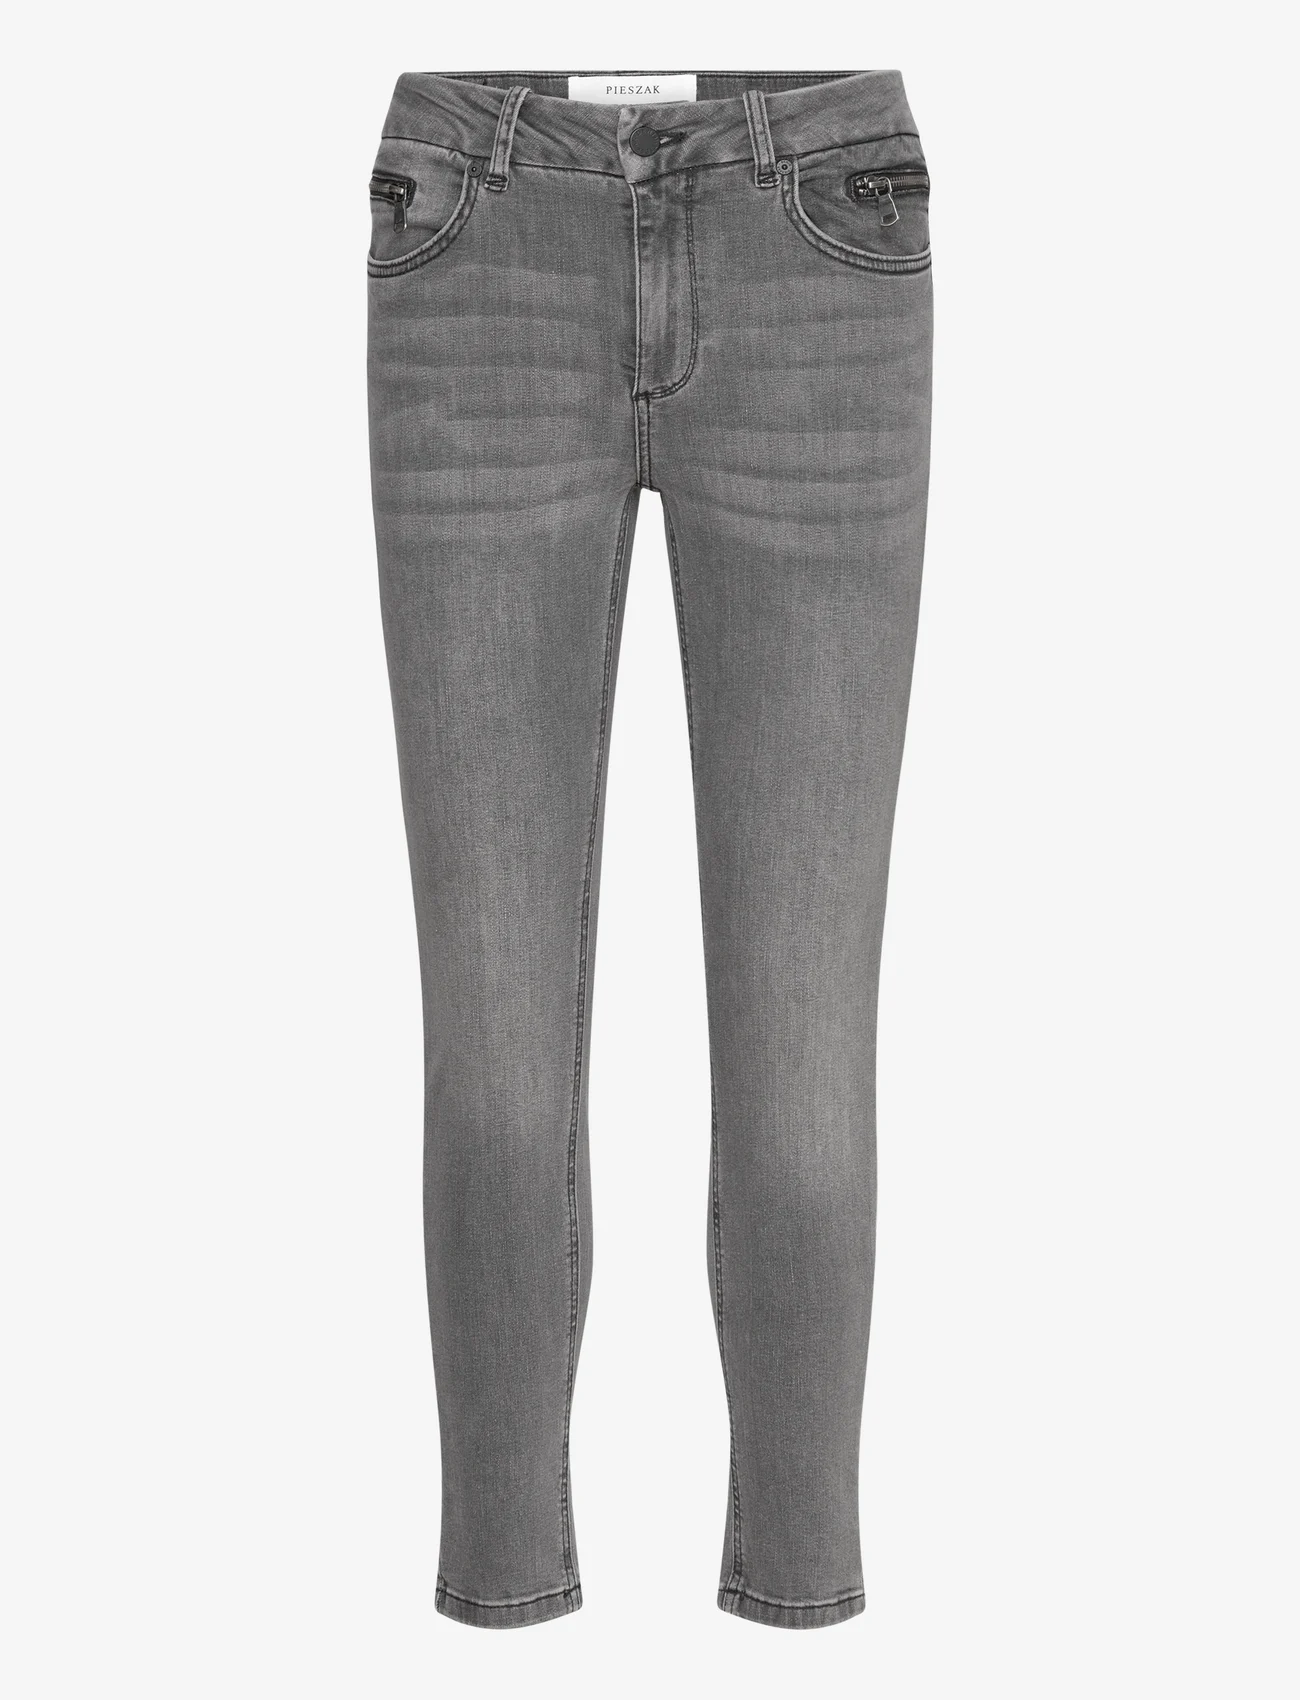 Pieszak - PD-Naomi Jeans Wash Awesome Grey - slim fit jeans - grey - 0